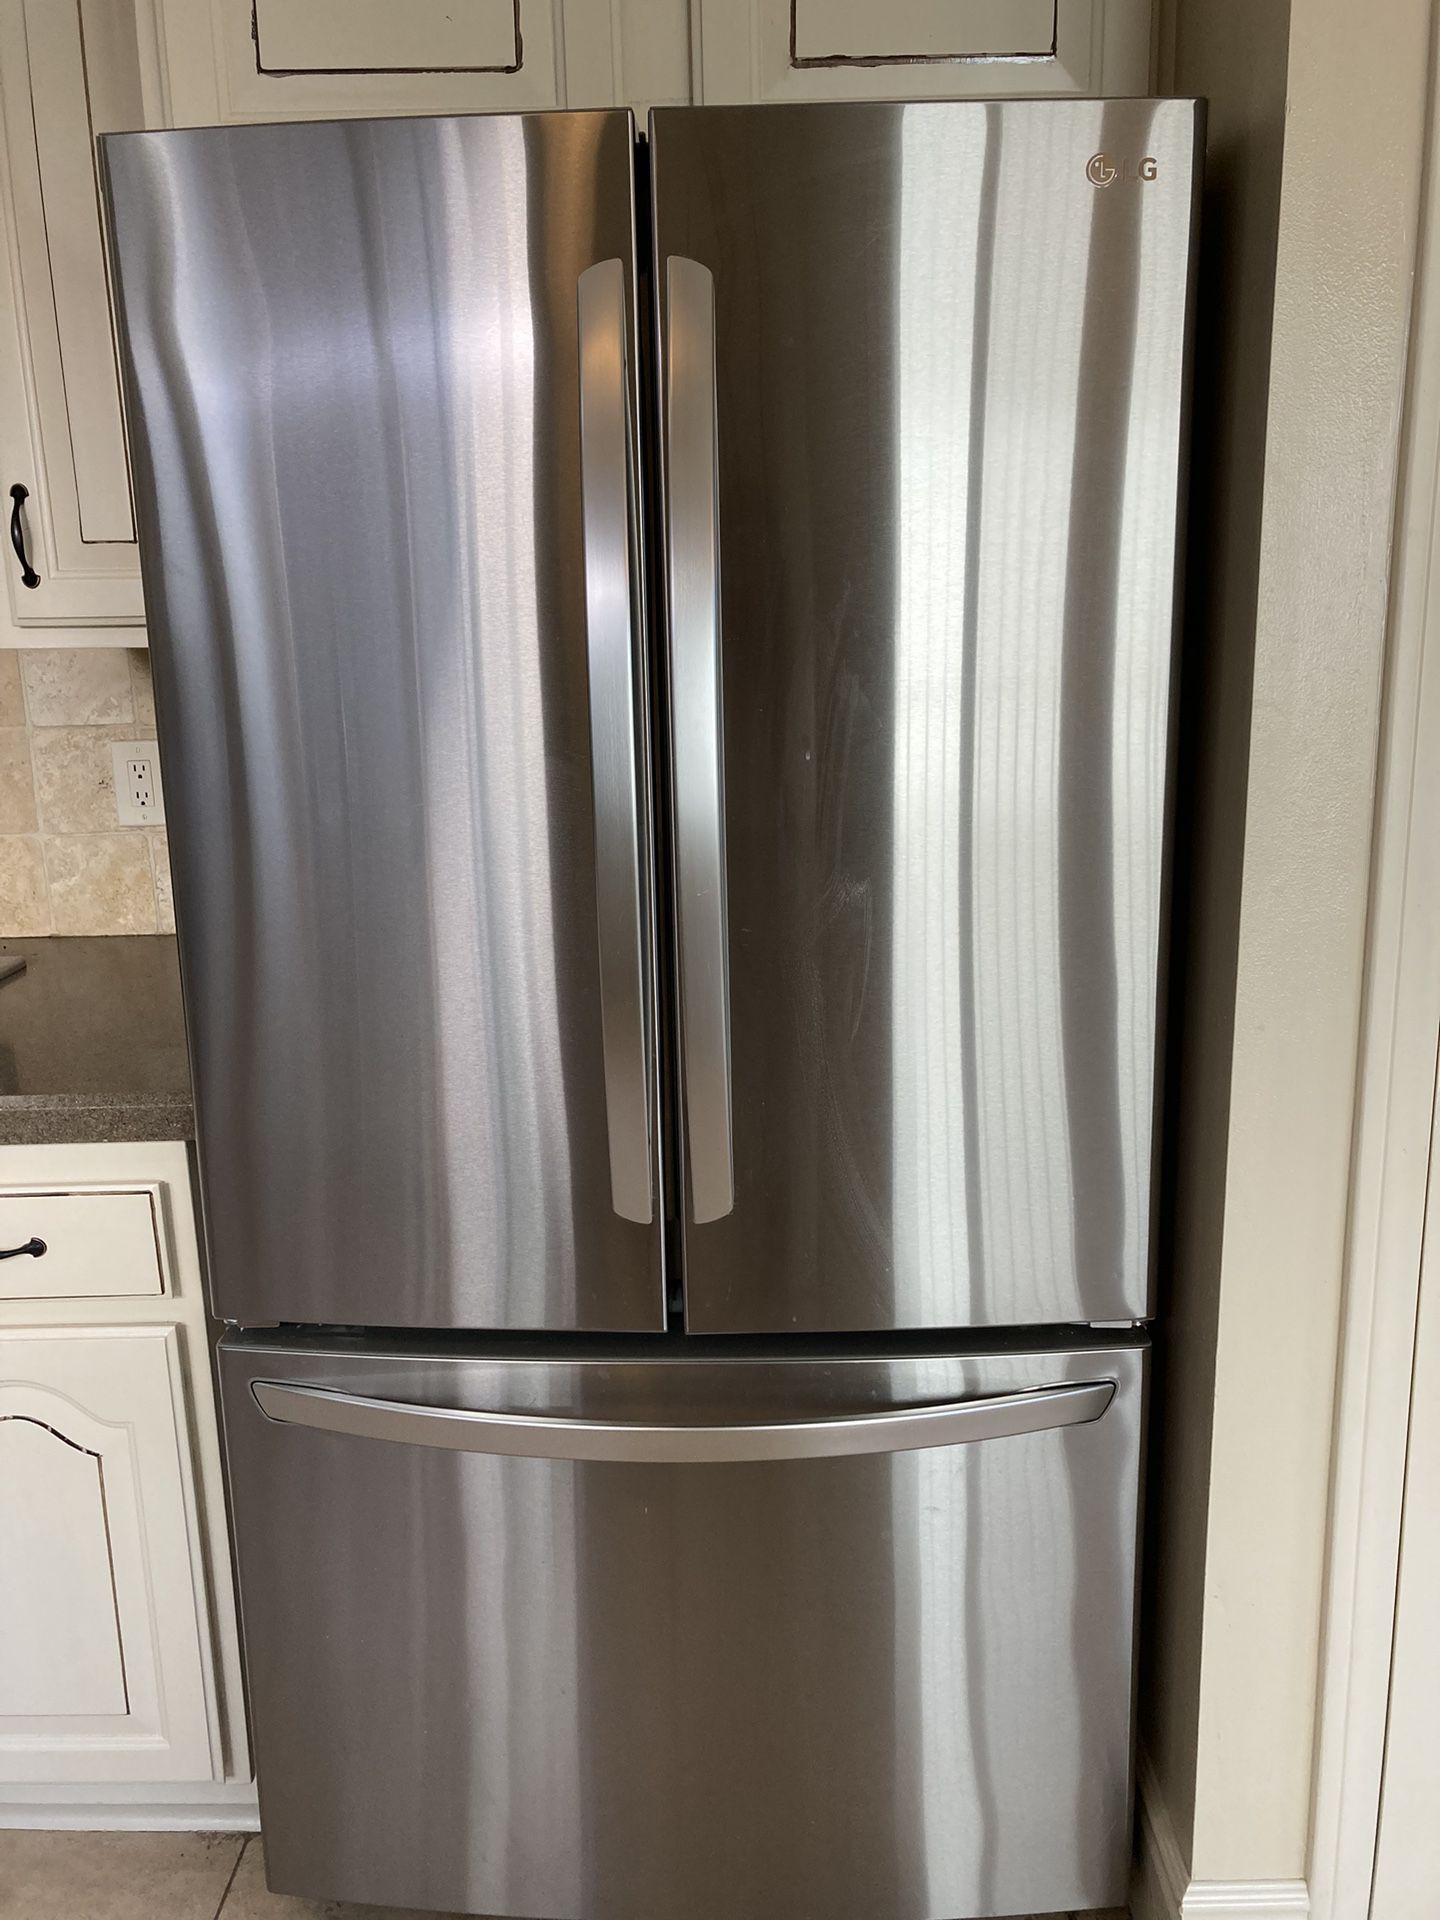 LG Stainless Refrigerator/Freezer